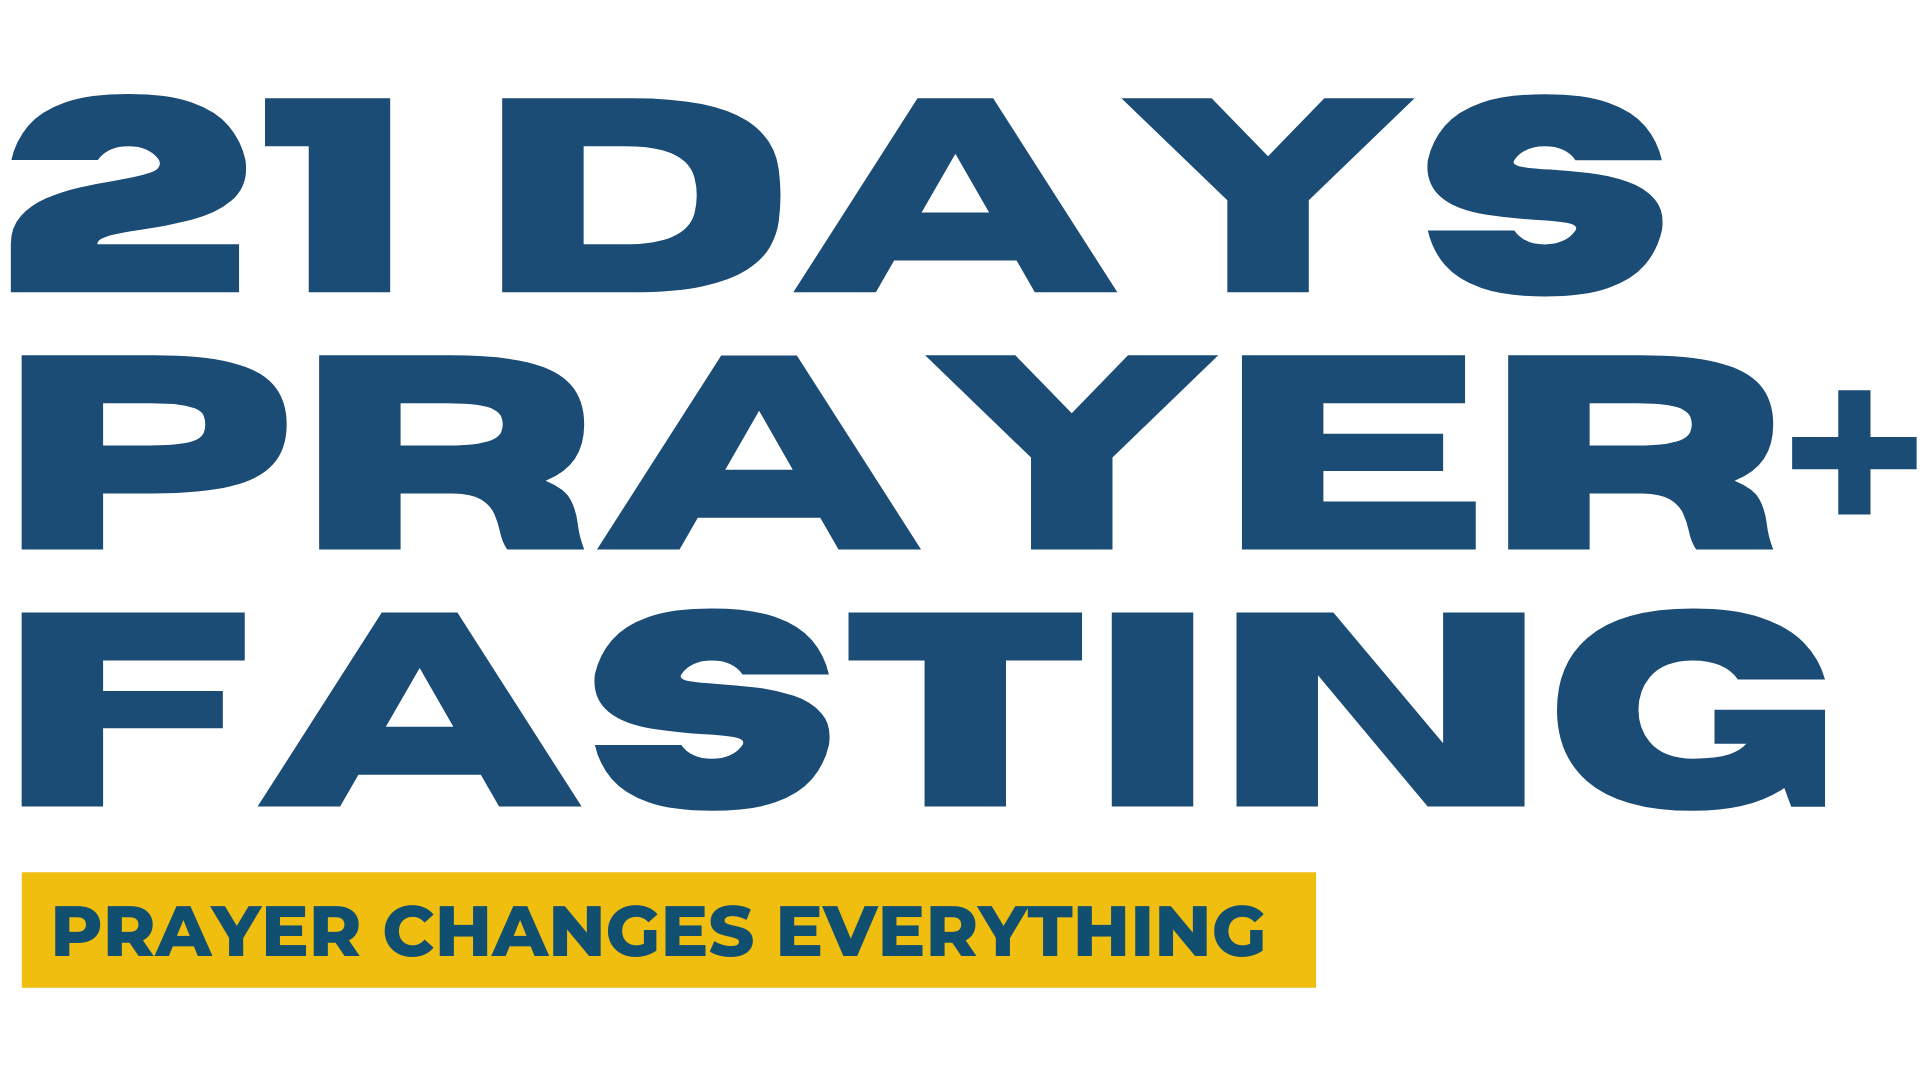 21 Days Prayer Fasting at Passion Church Tucson Arizona